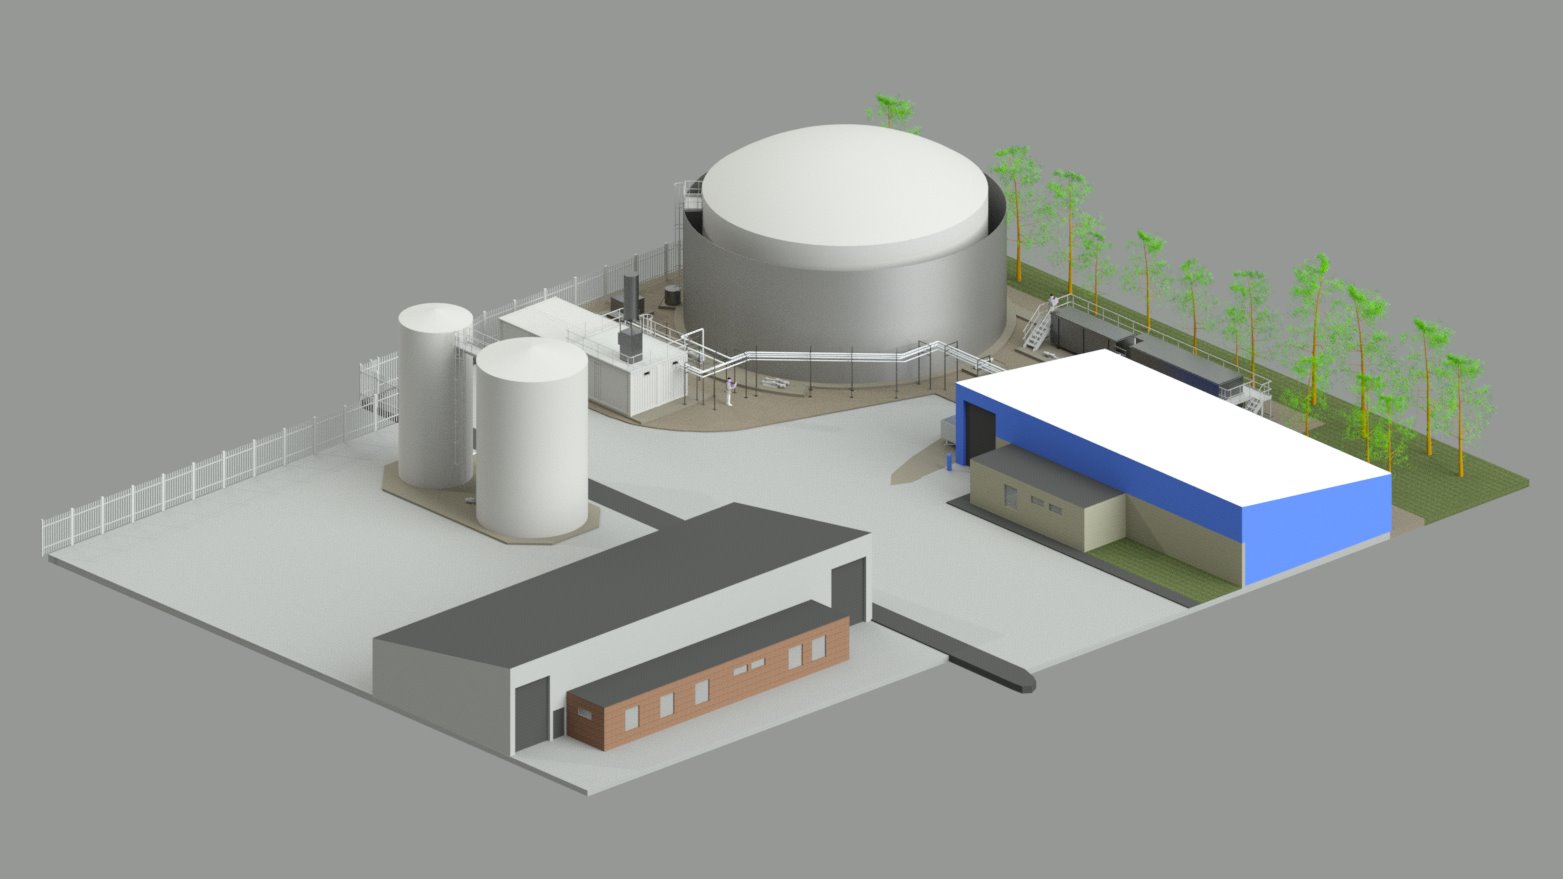 Graham’s lodges plans for Fife bioenergy facility